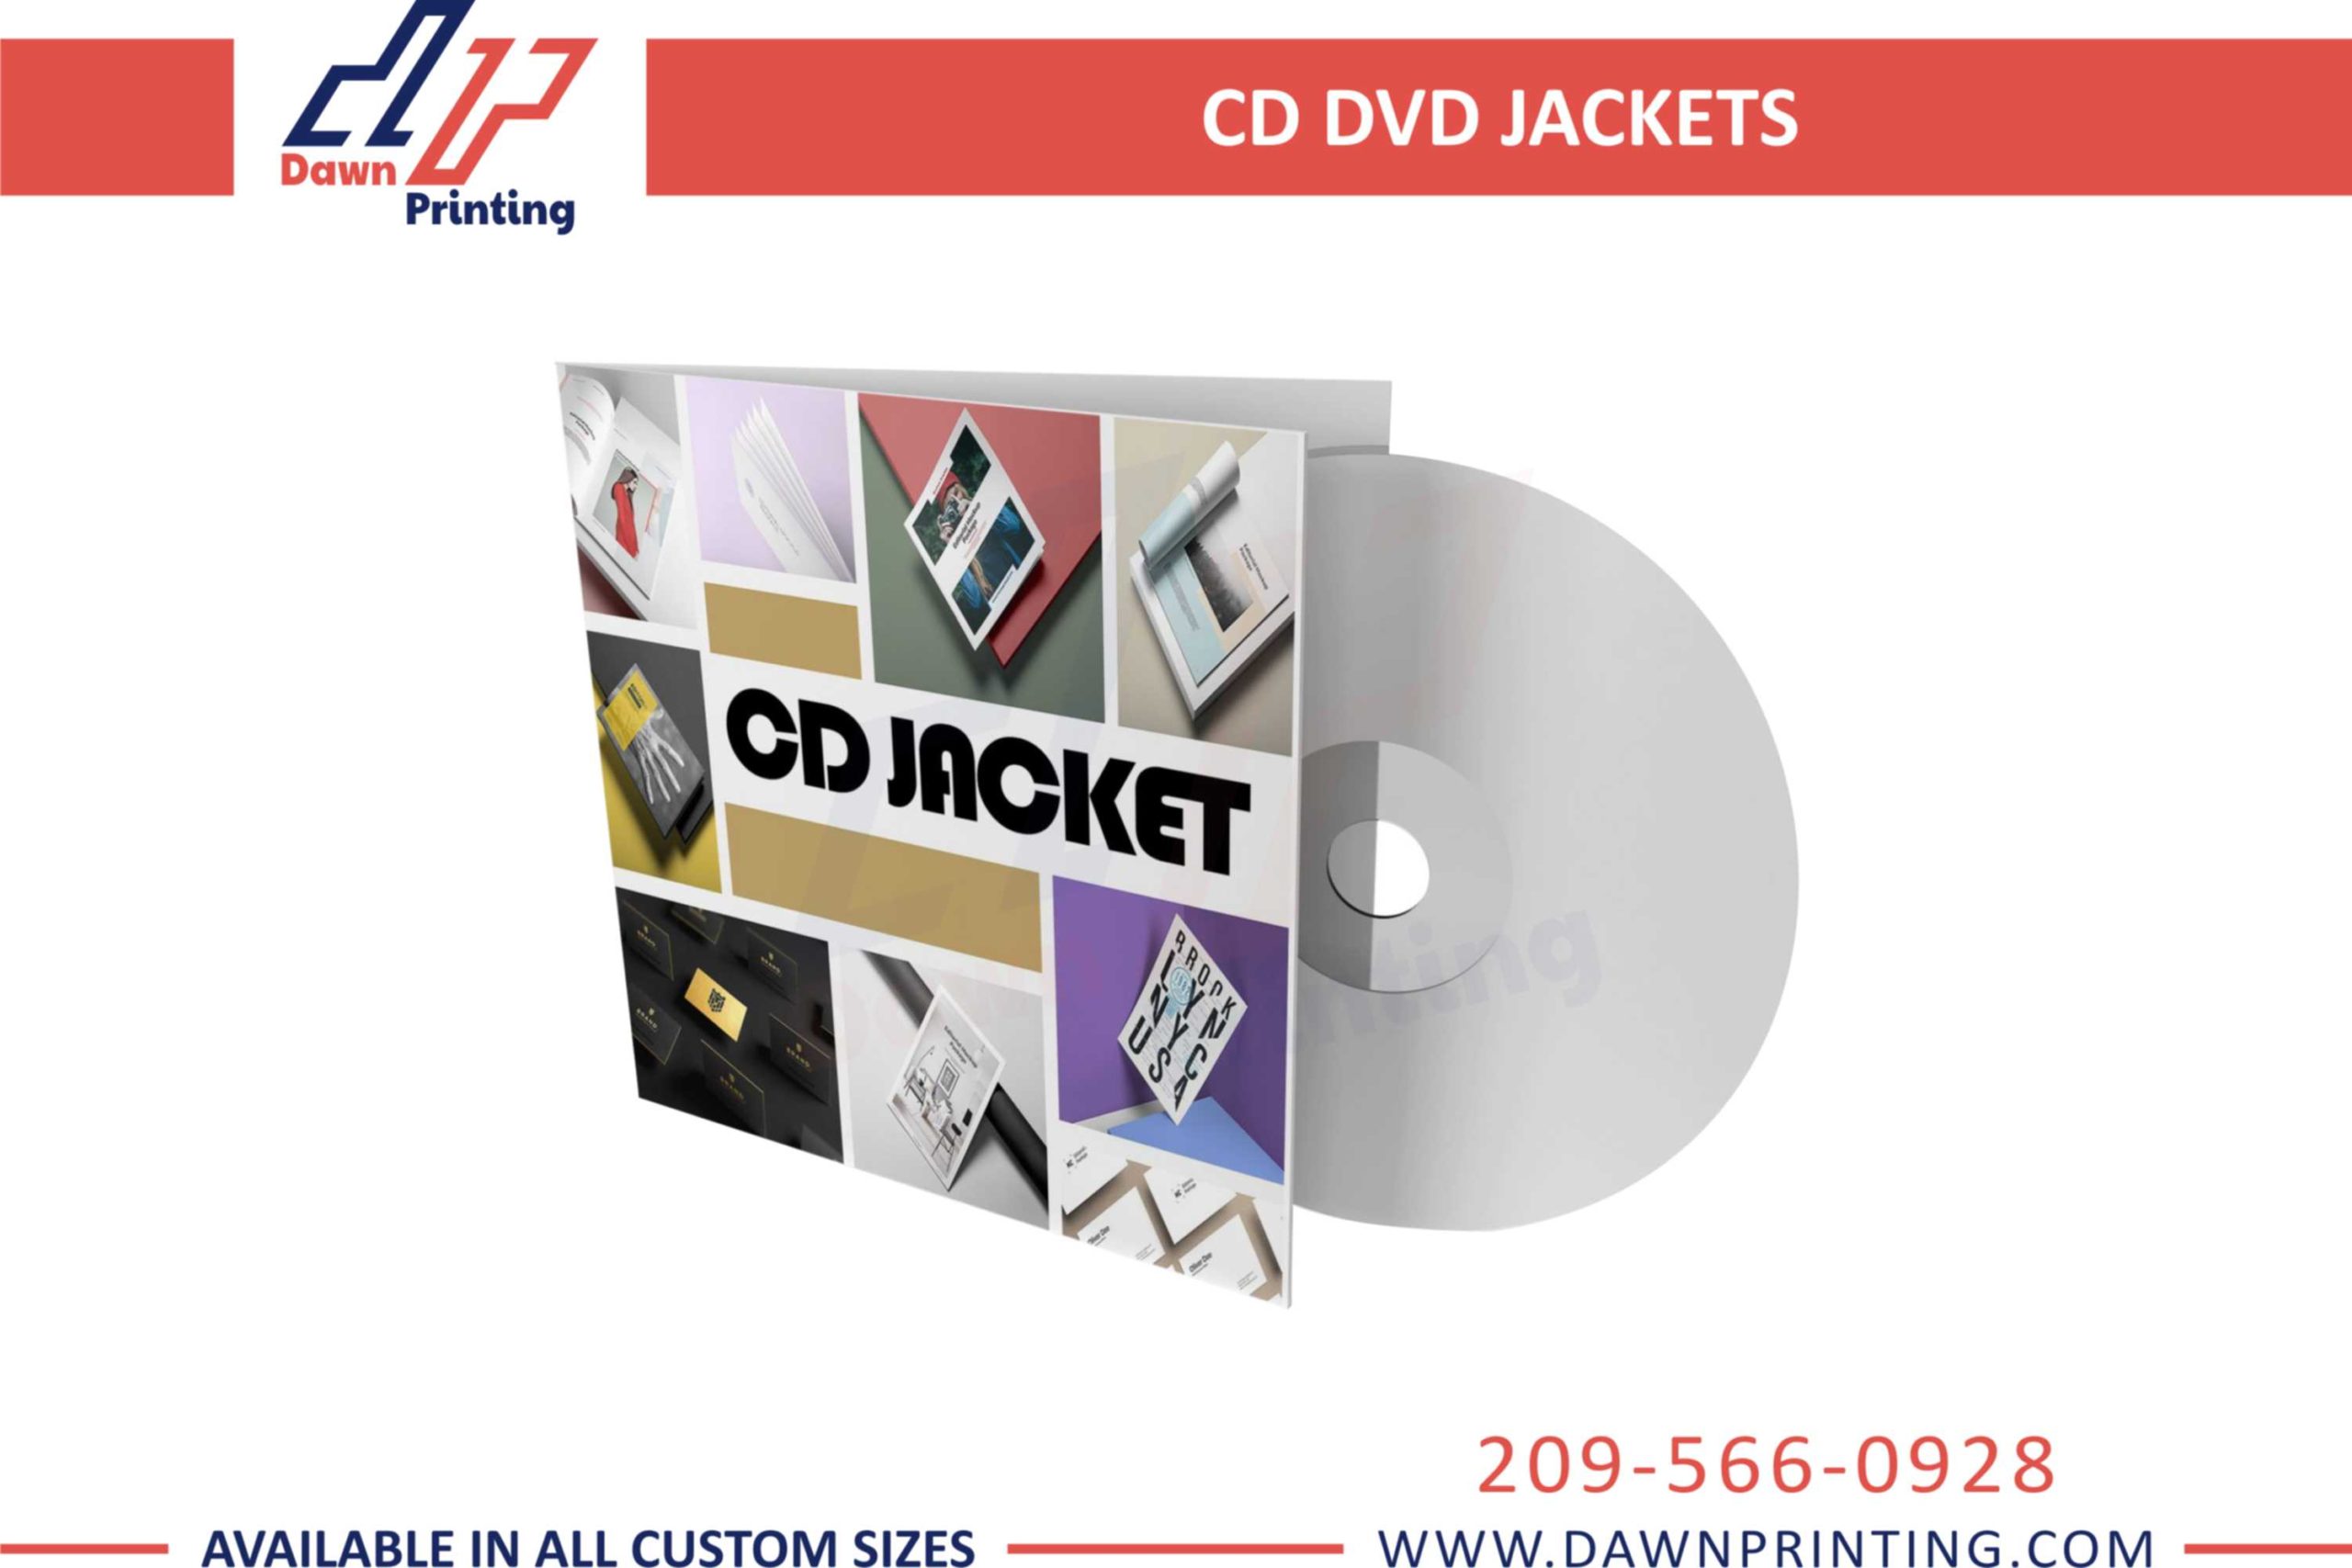 Dawn Printing - CD DVD Printed Jackets in USA